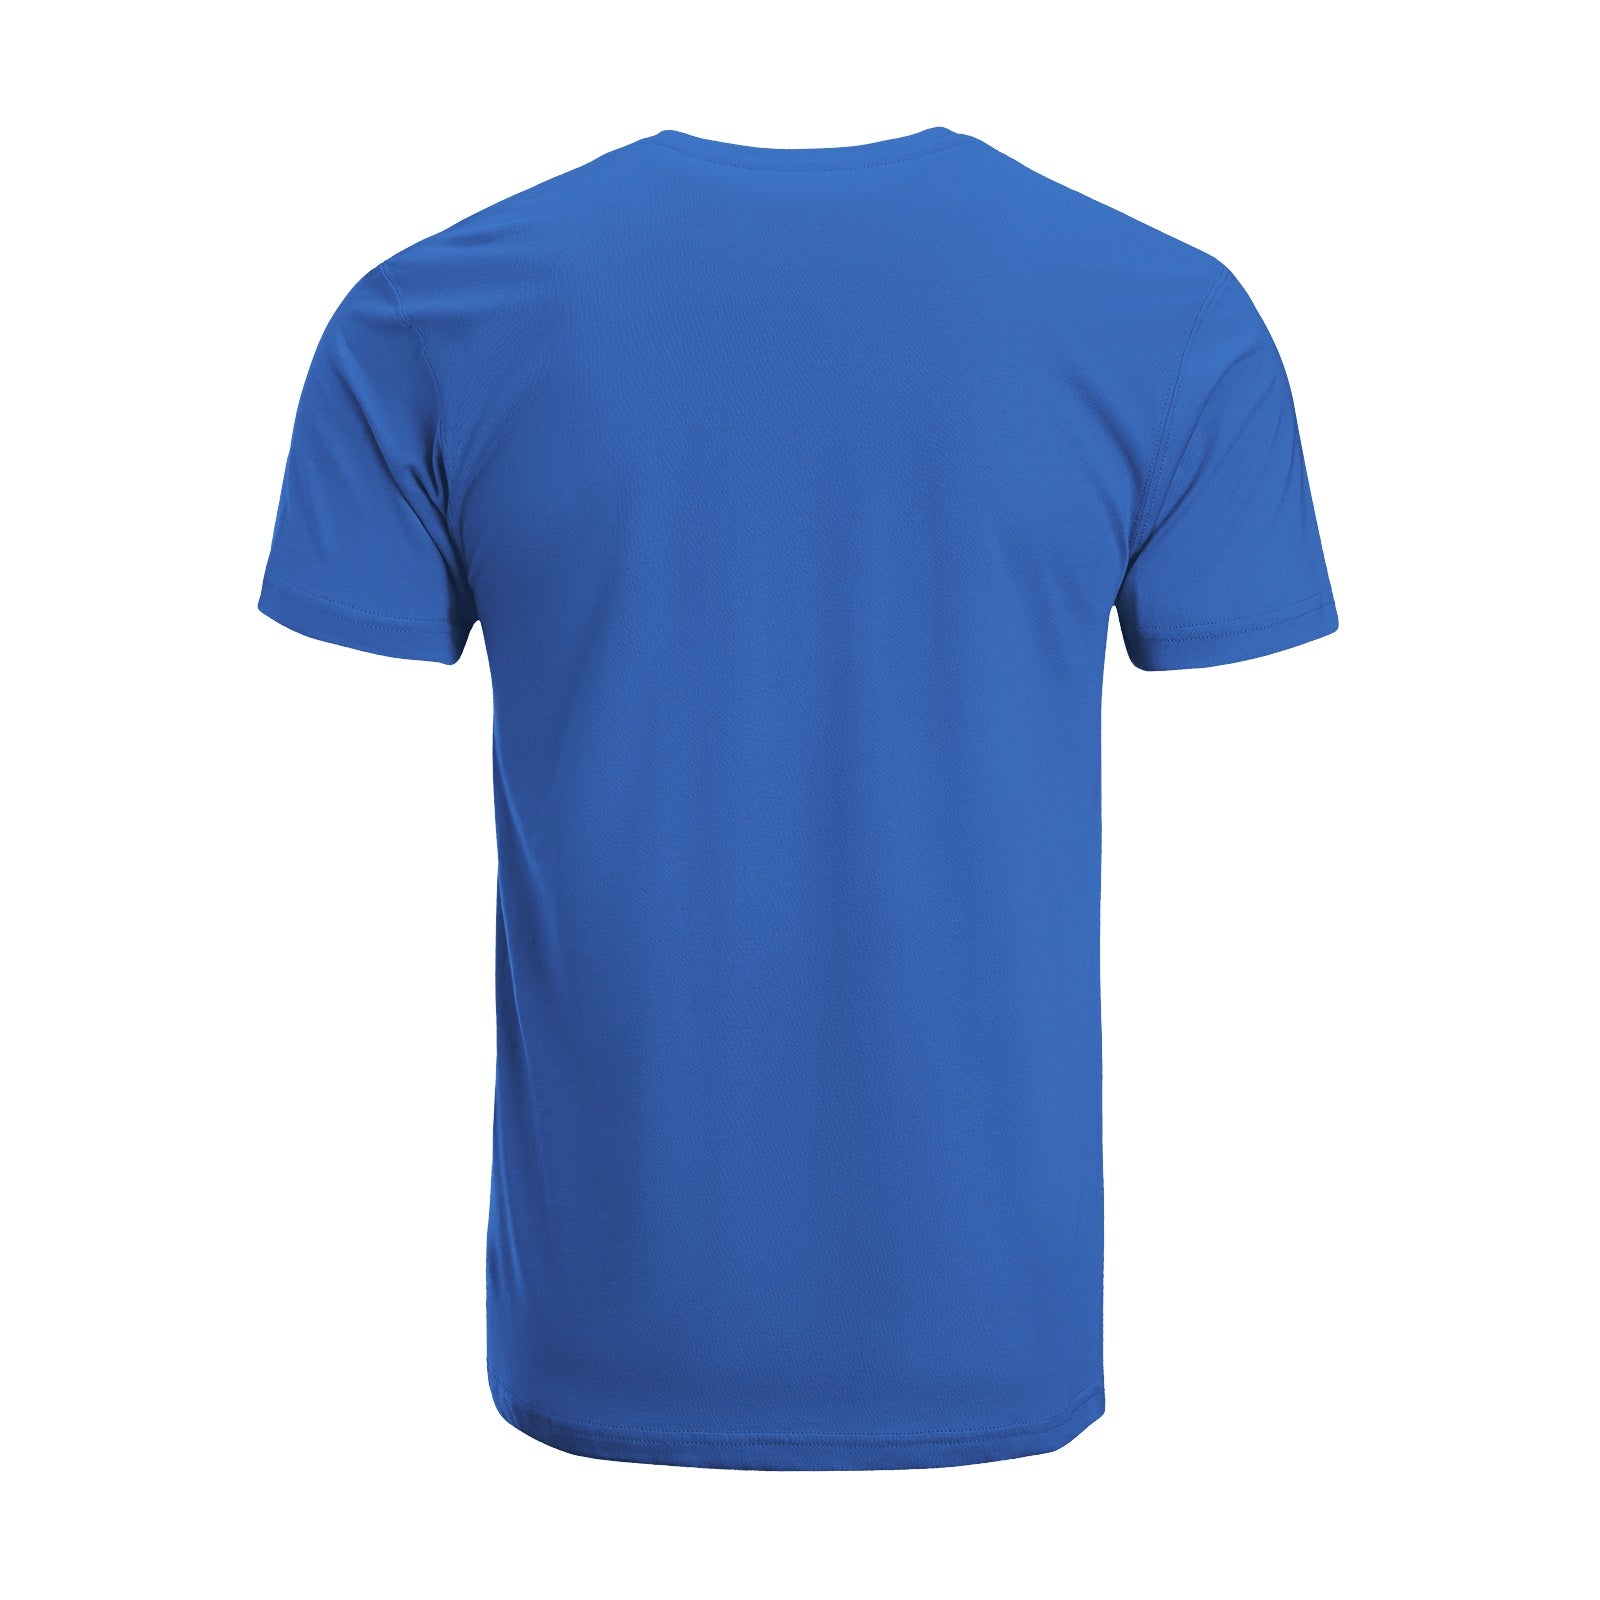 Unisex Short Sleeve Crew Neck Cotton Jersey T-Shirt CAT 04 - Tara-Outfits.com